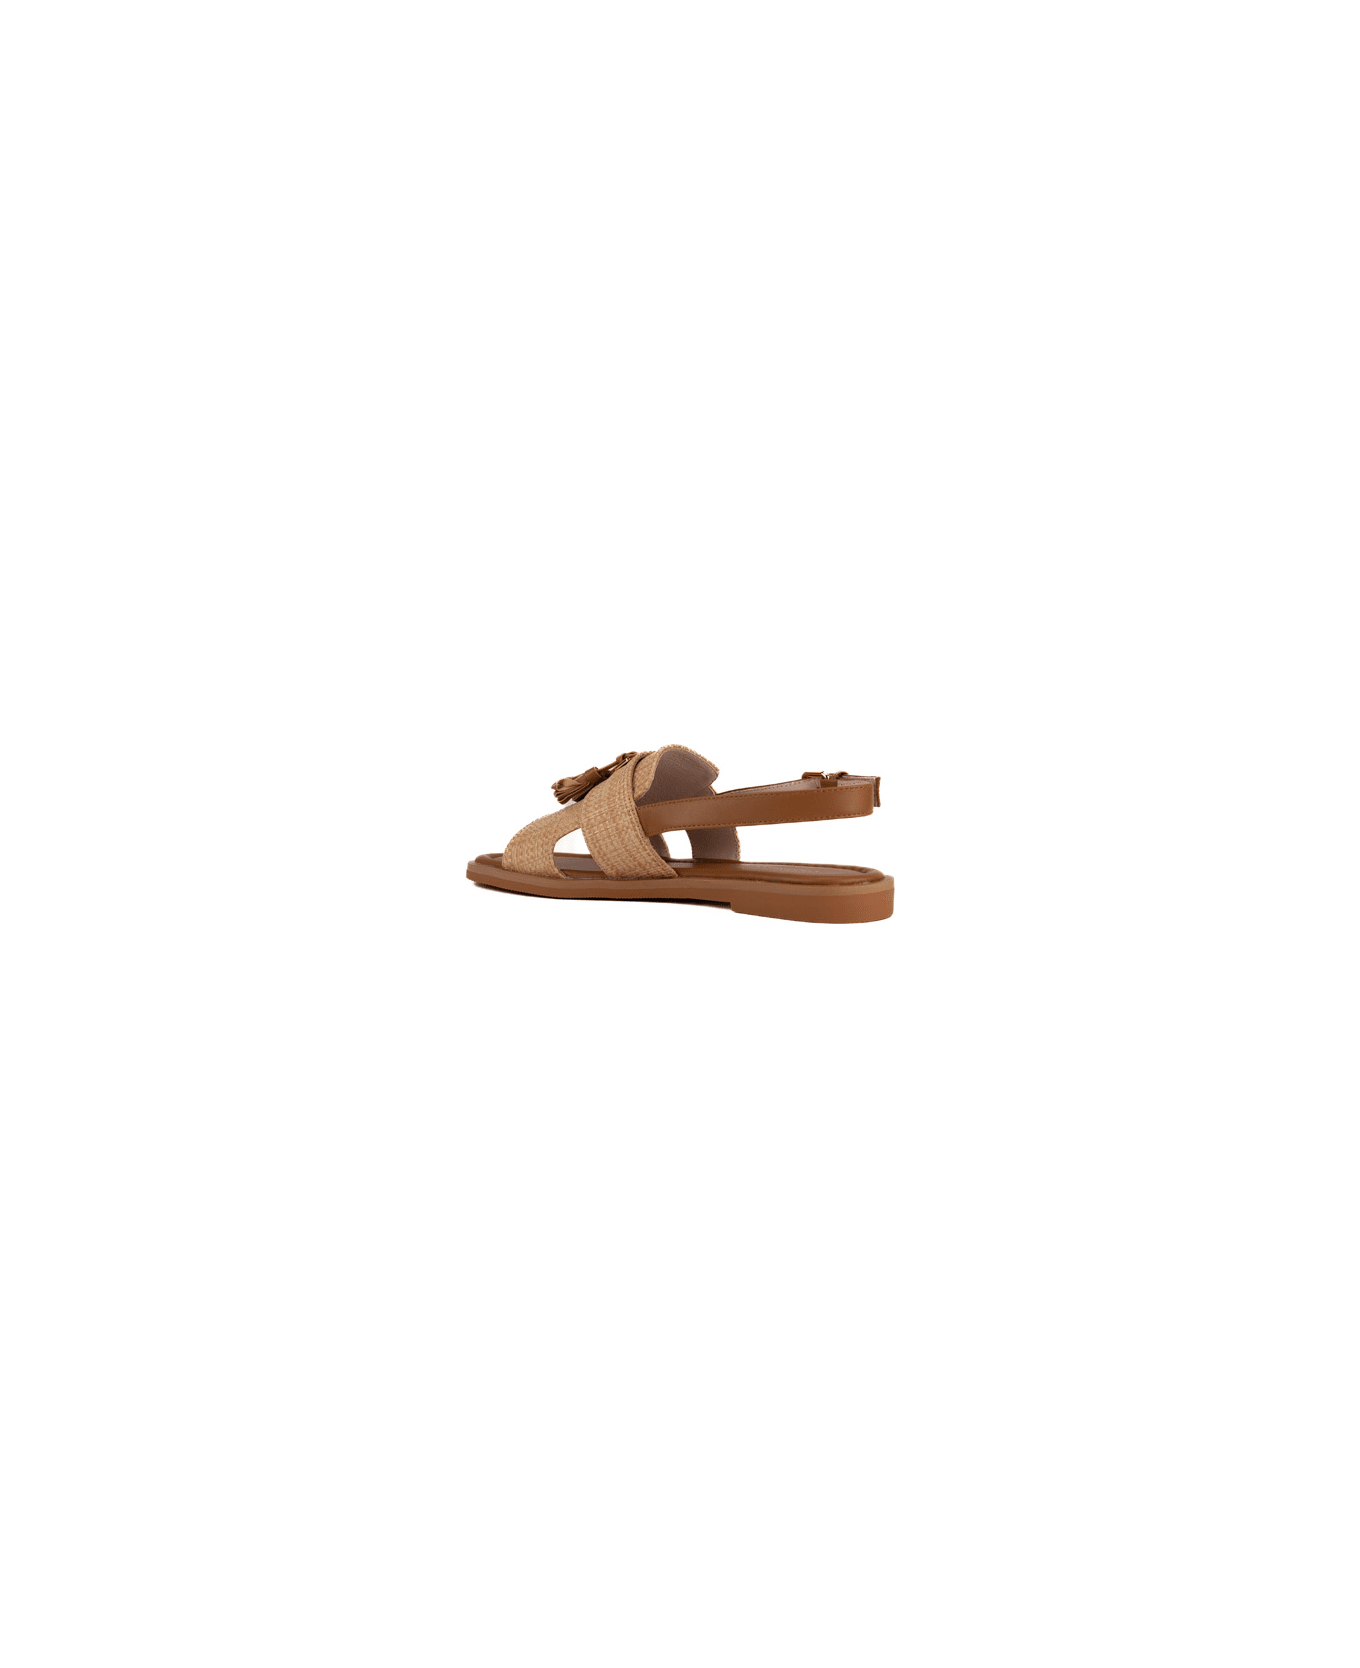 Coccinelle Raffia Sandal With Brown Tassels - Natural/cuir